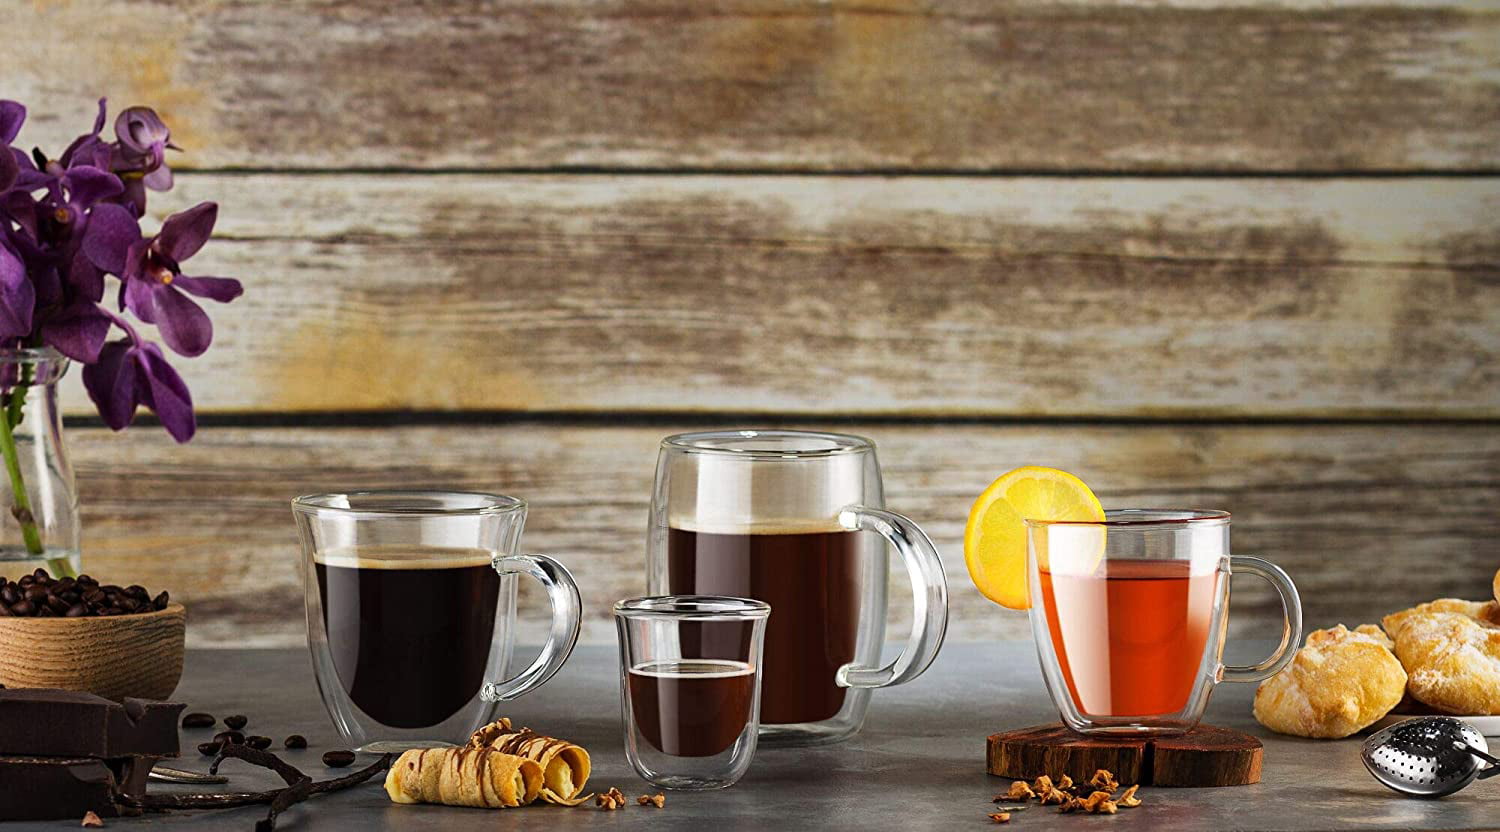 Glass Espresso Cups - Double Wall Insulated Coffee Mugs -  Designed in USA - Set of 2, 5 oz - For Cappuccino, Latte, Tea, Shots -  Borosilicate Glassware - Dishwasher, Microwave Safe - Premium Gift Box:  Liquor Decanters